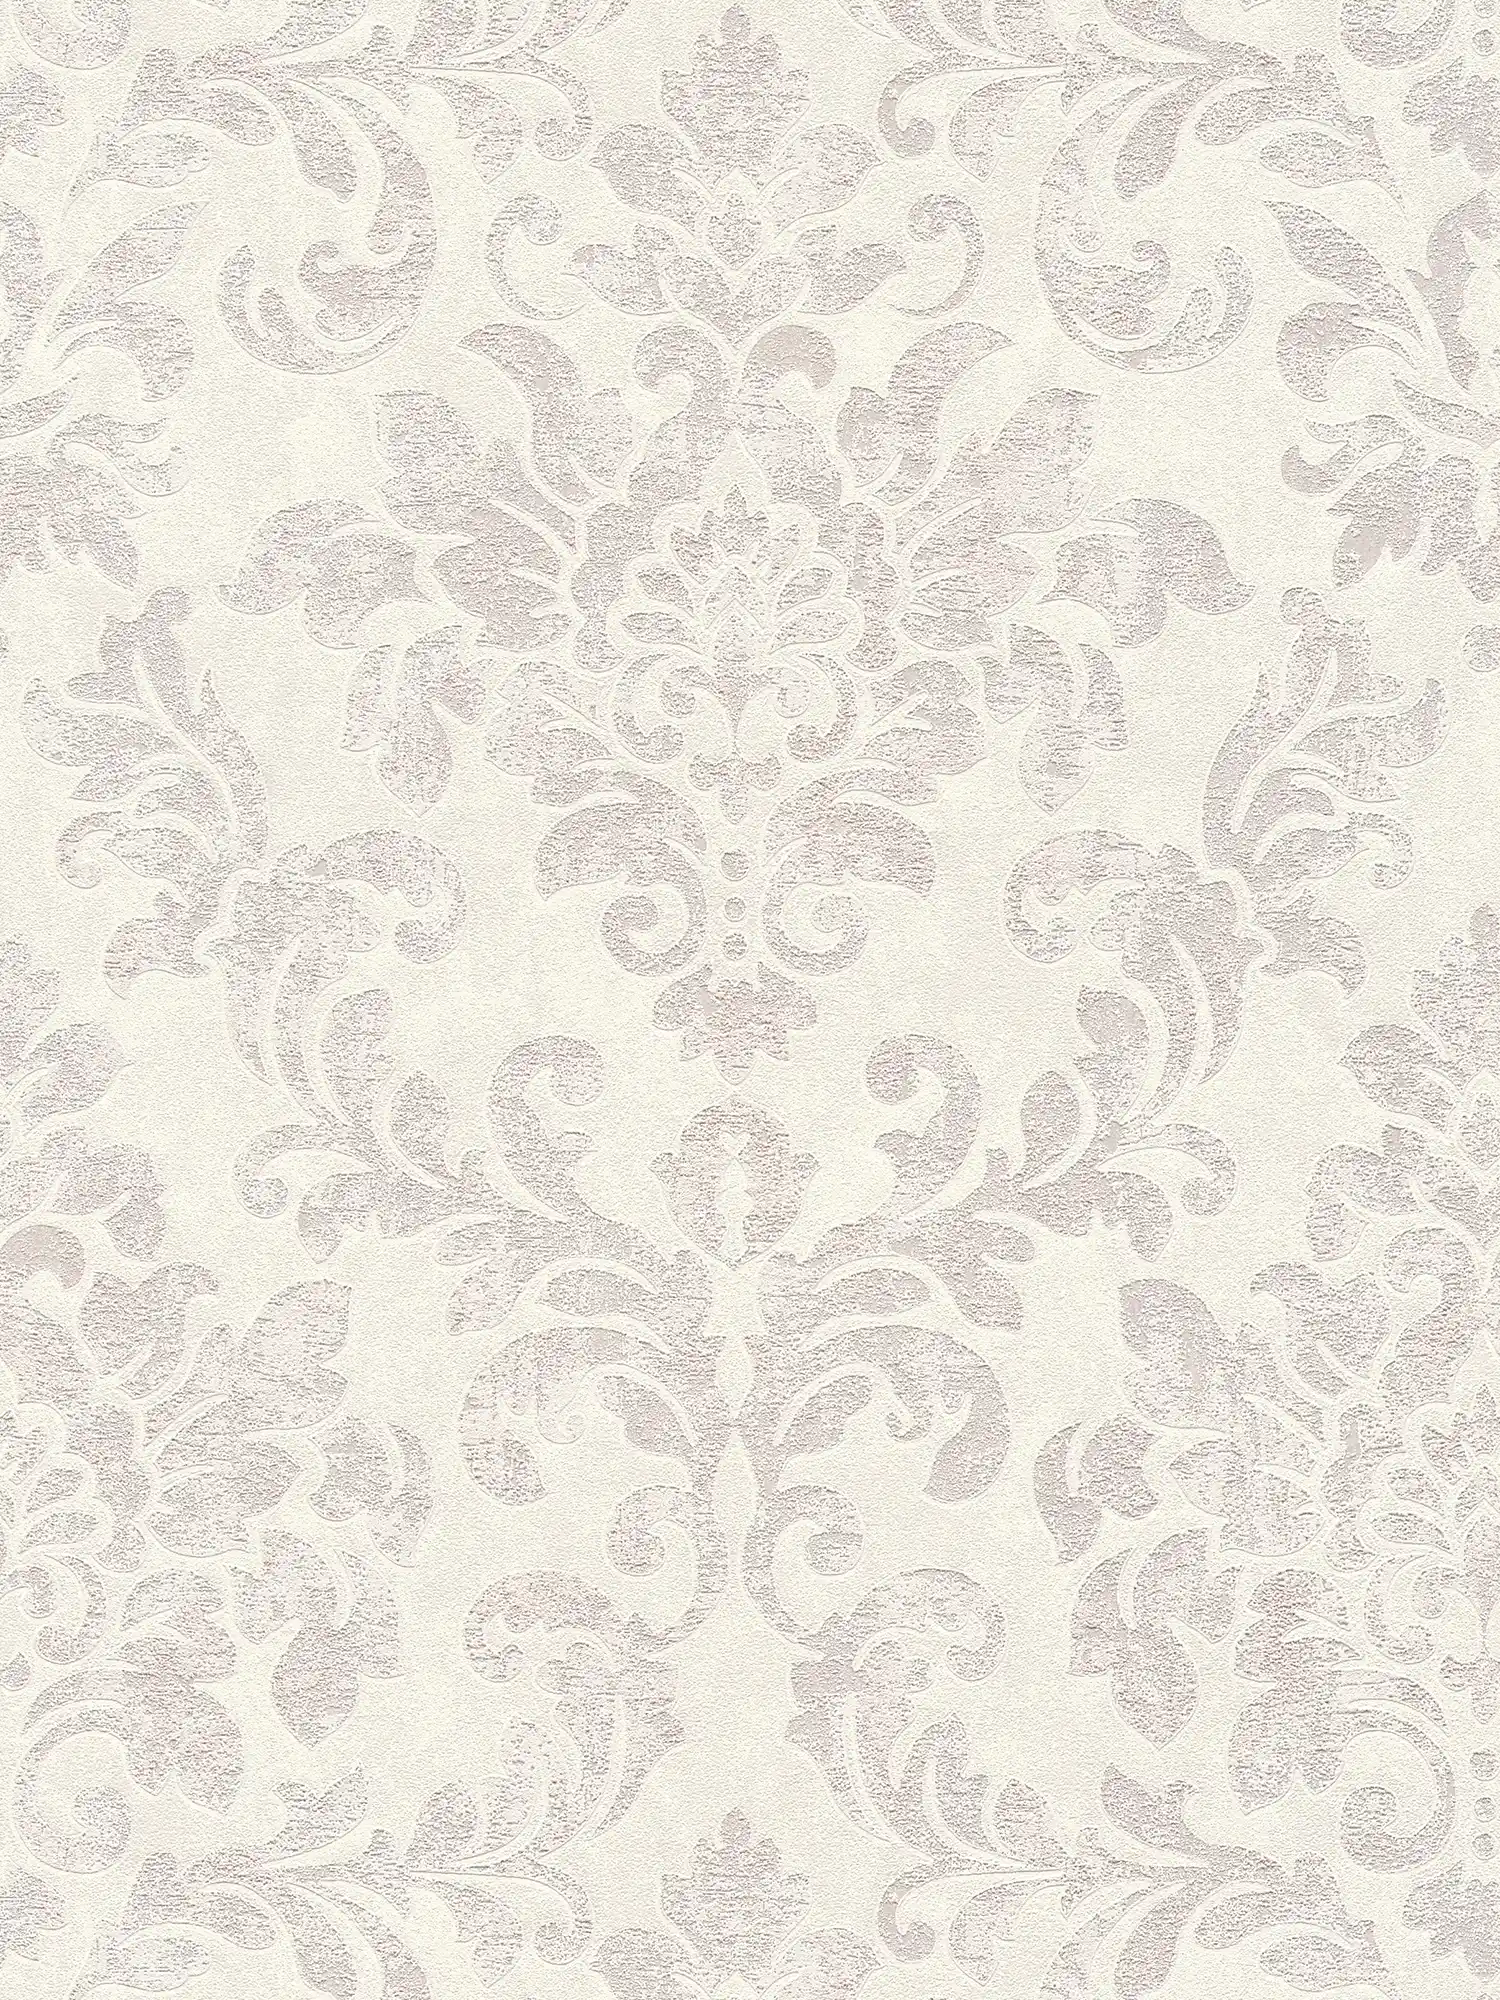         Barock-Tapete Ornamente im Used Look – Weiß, Grau, Rosa
    